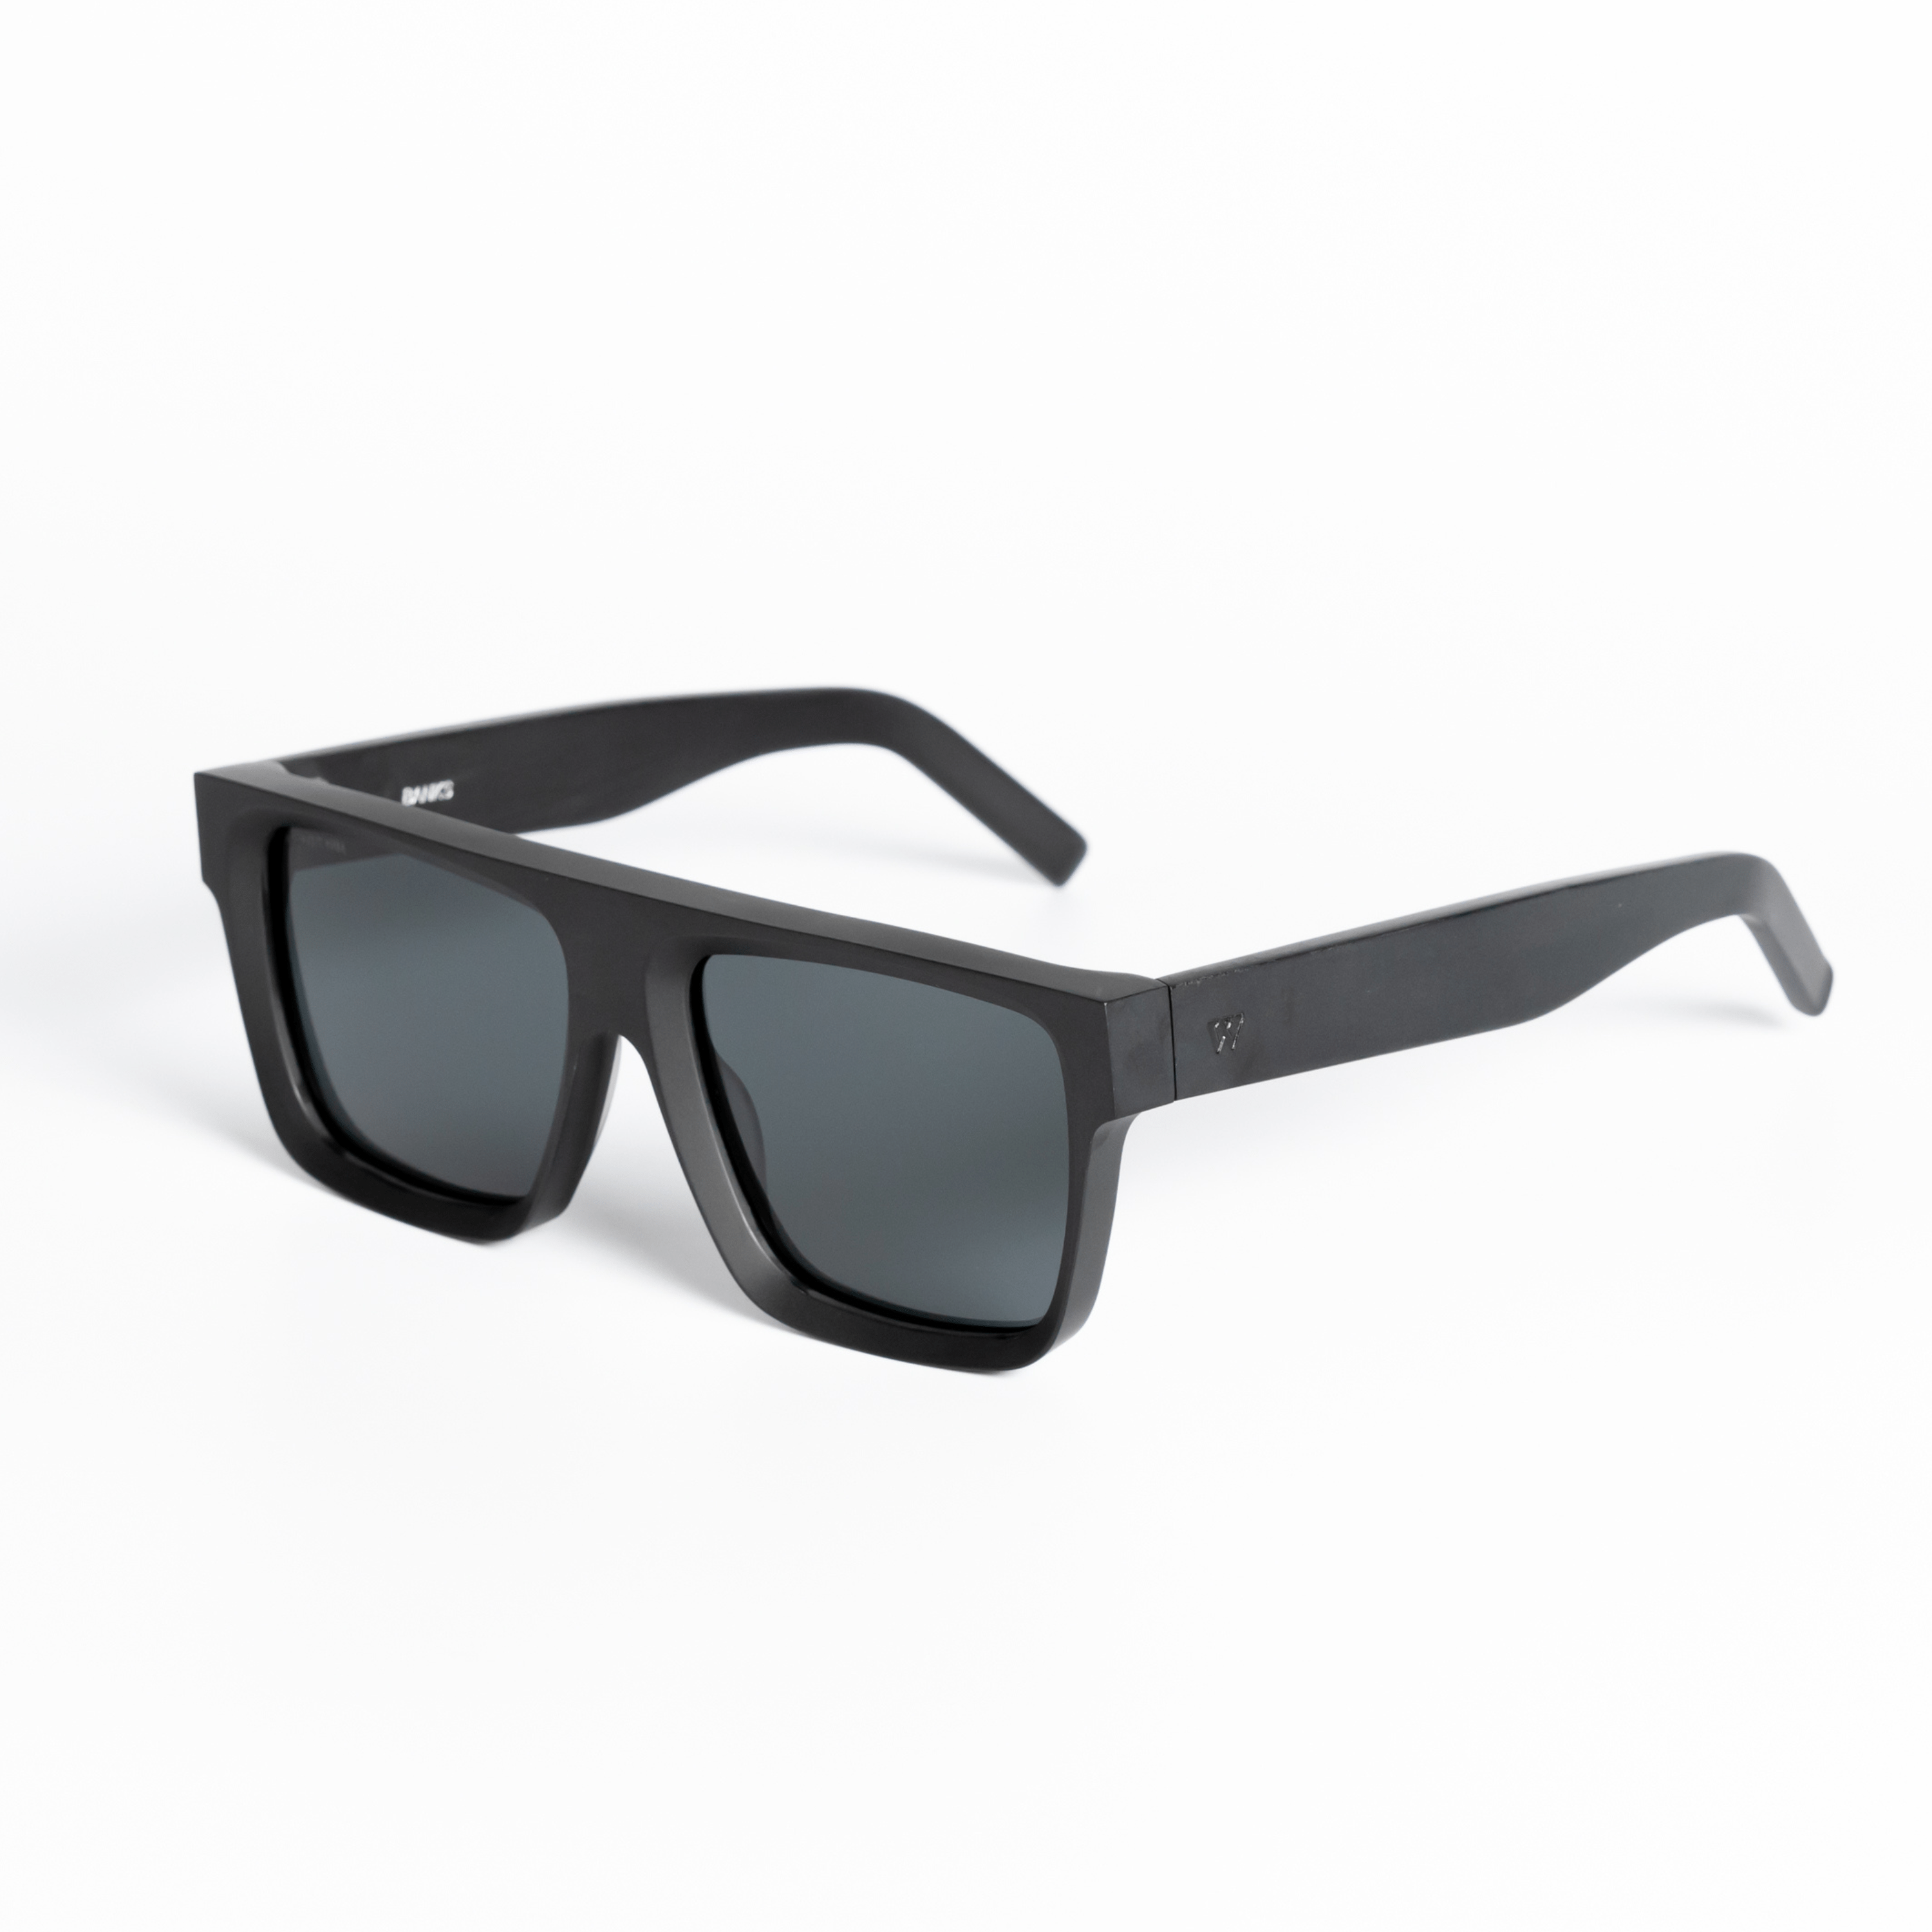 Walter Hill Sunglasses Oversized BANKS - Matte Black